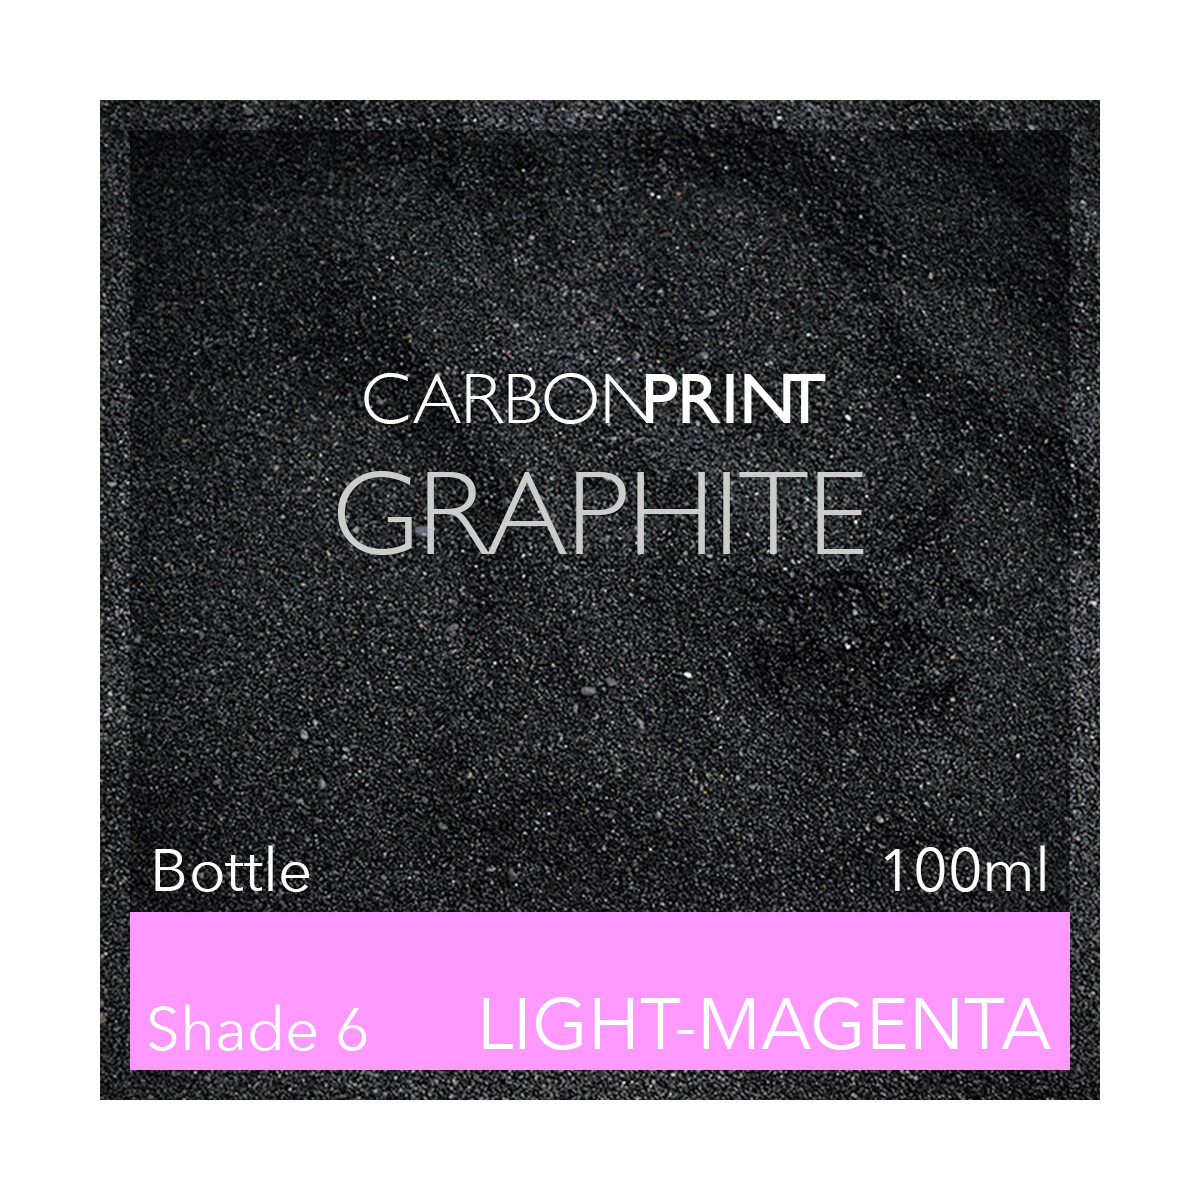 Carbonprint Graphite Shade6 Kanal LM 100ml Neutral